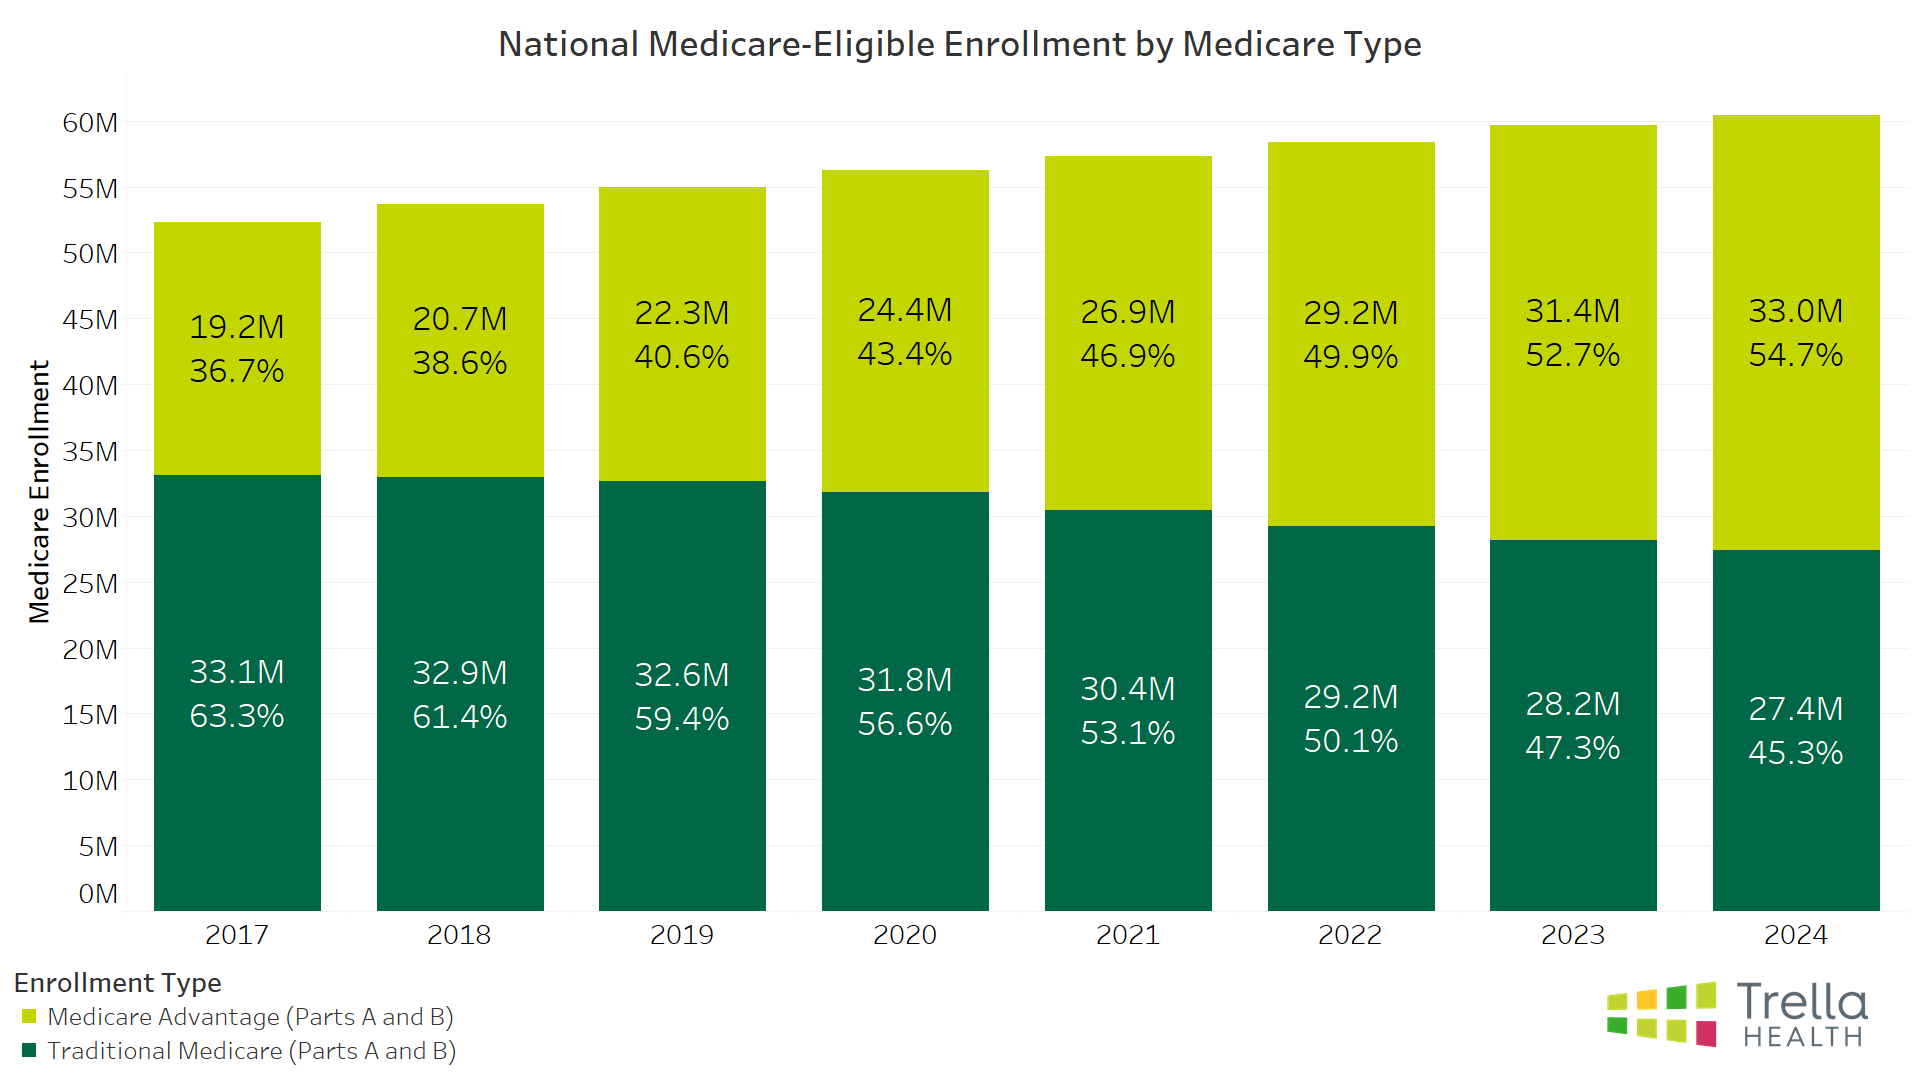 National Medicare-Eligible Enrollment by Medicare Type 2017-2024